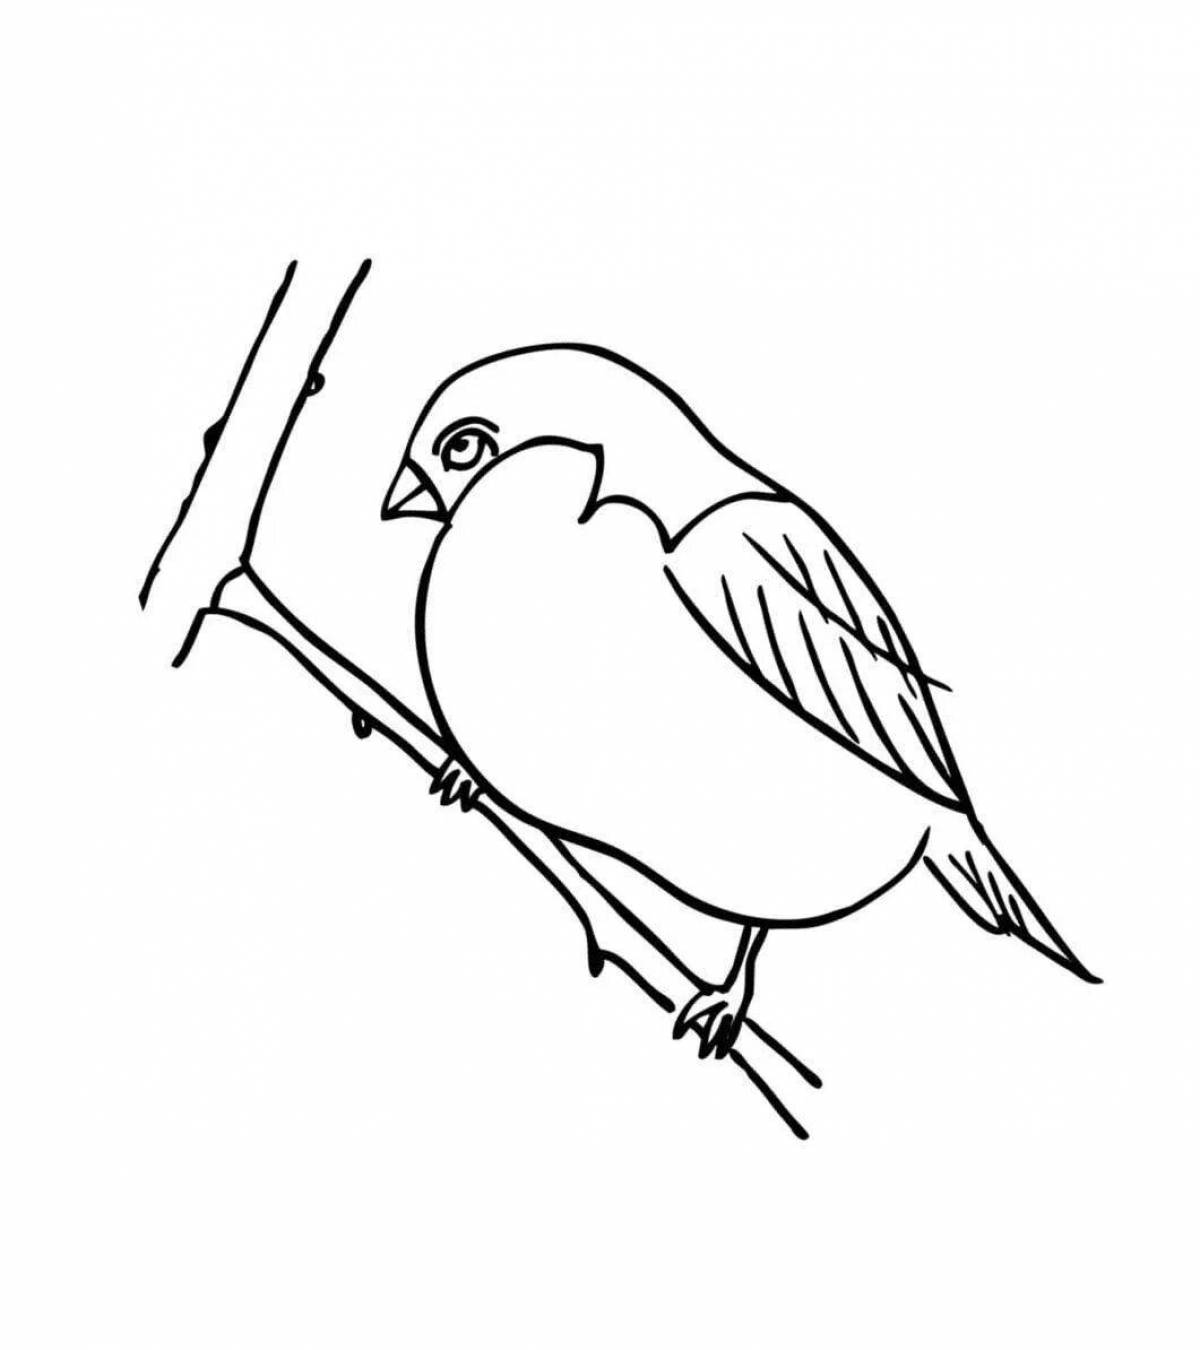 Alluring drawing of a bullfinch on a rowan branch